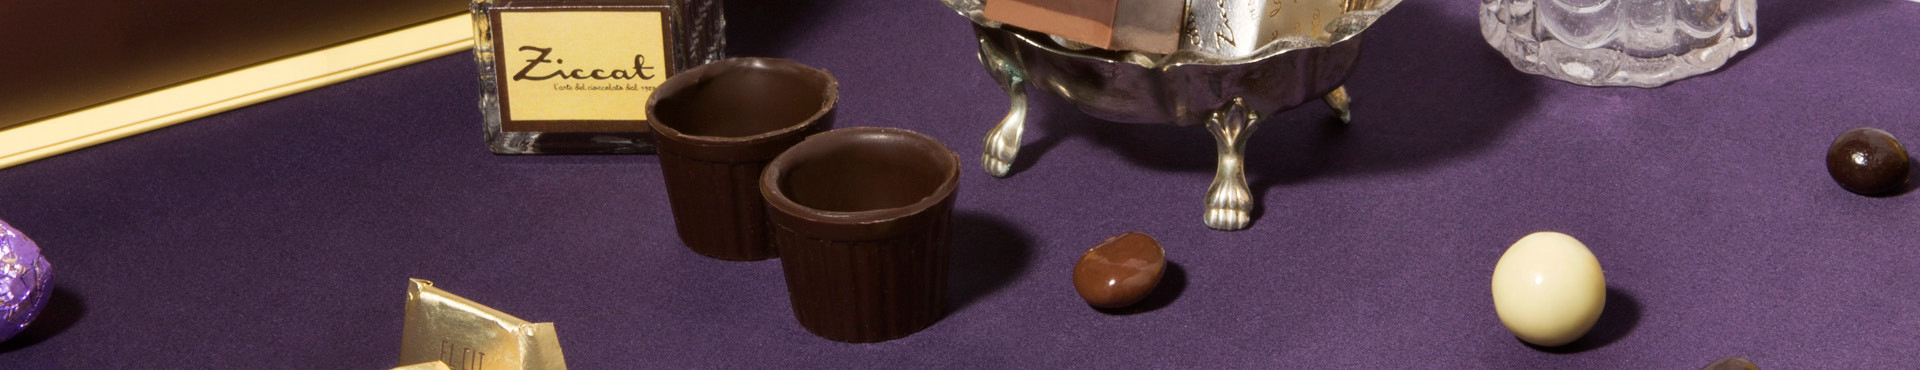 Chocolate Cups